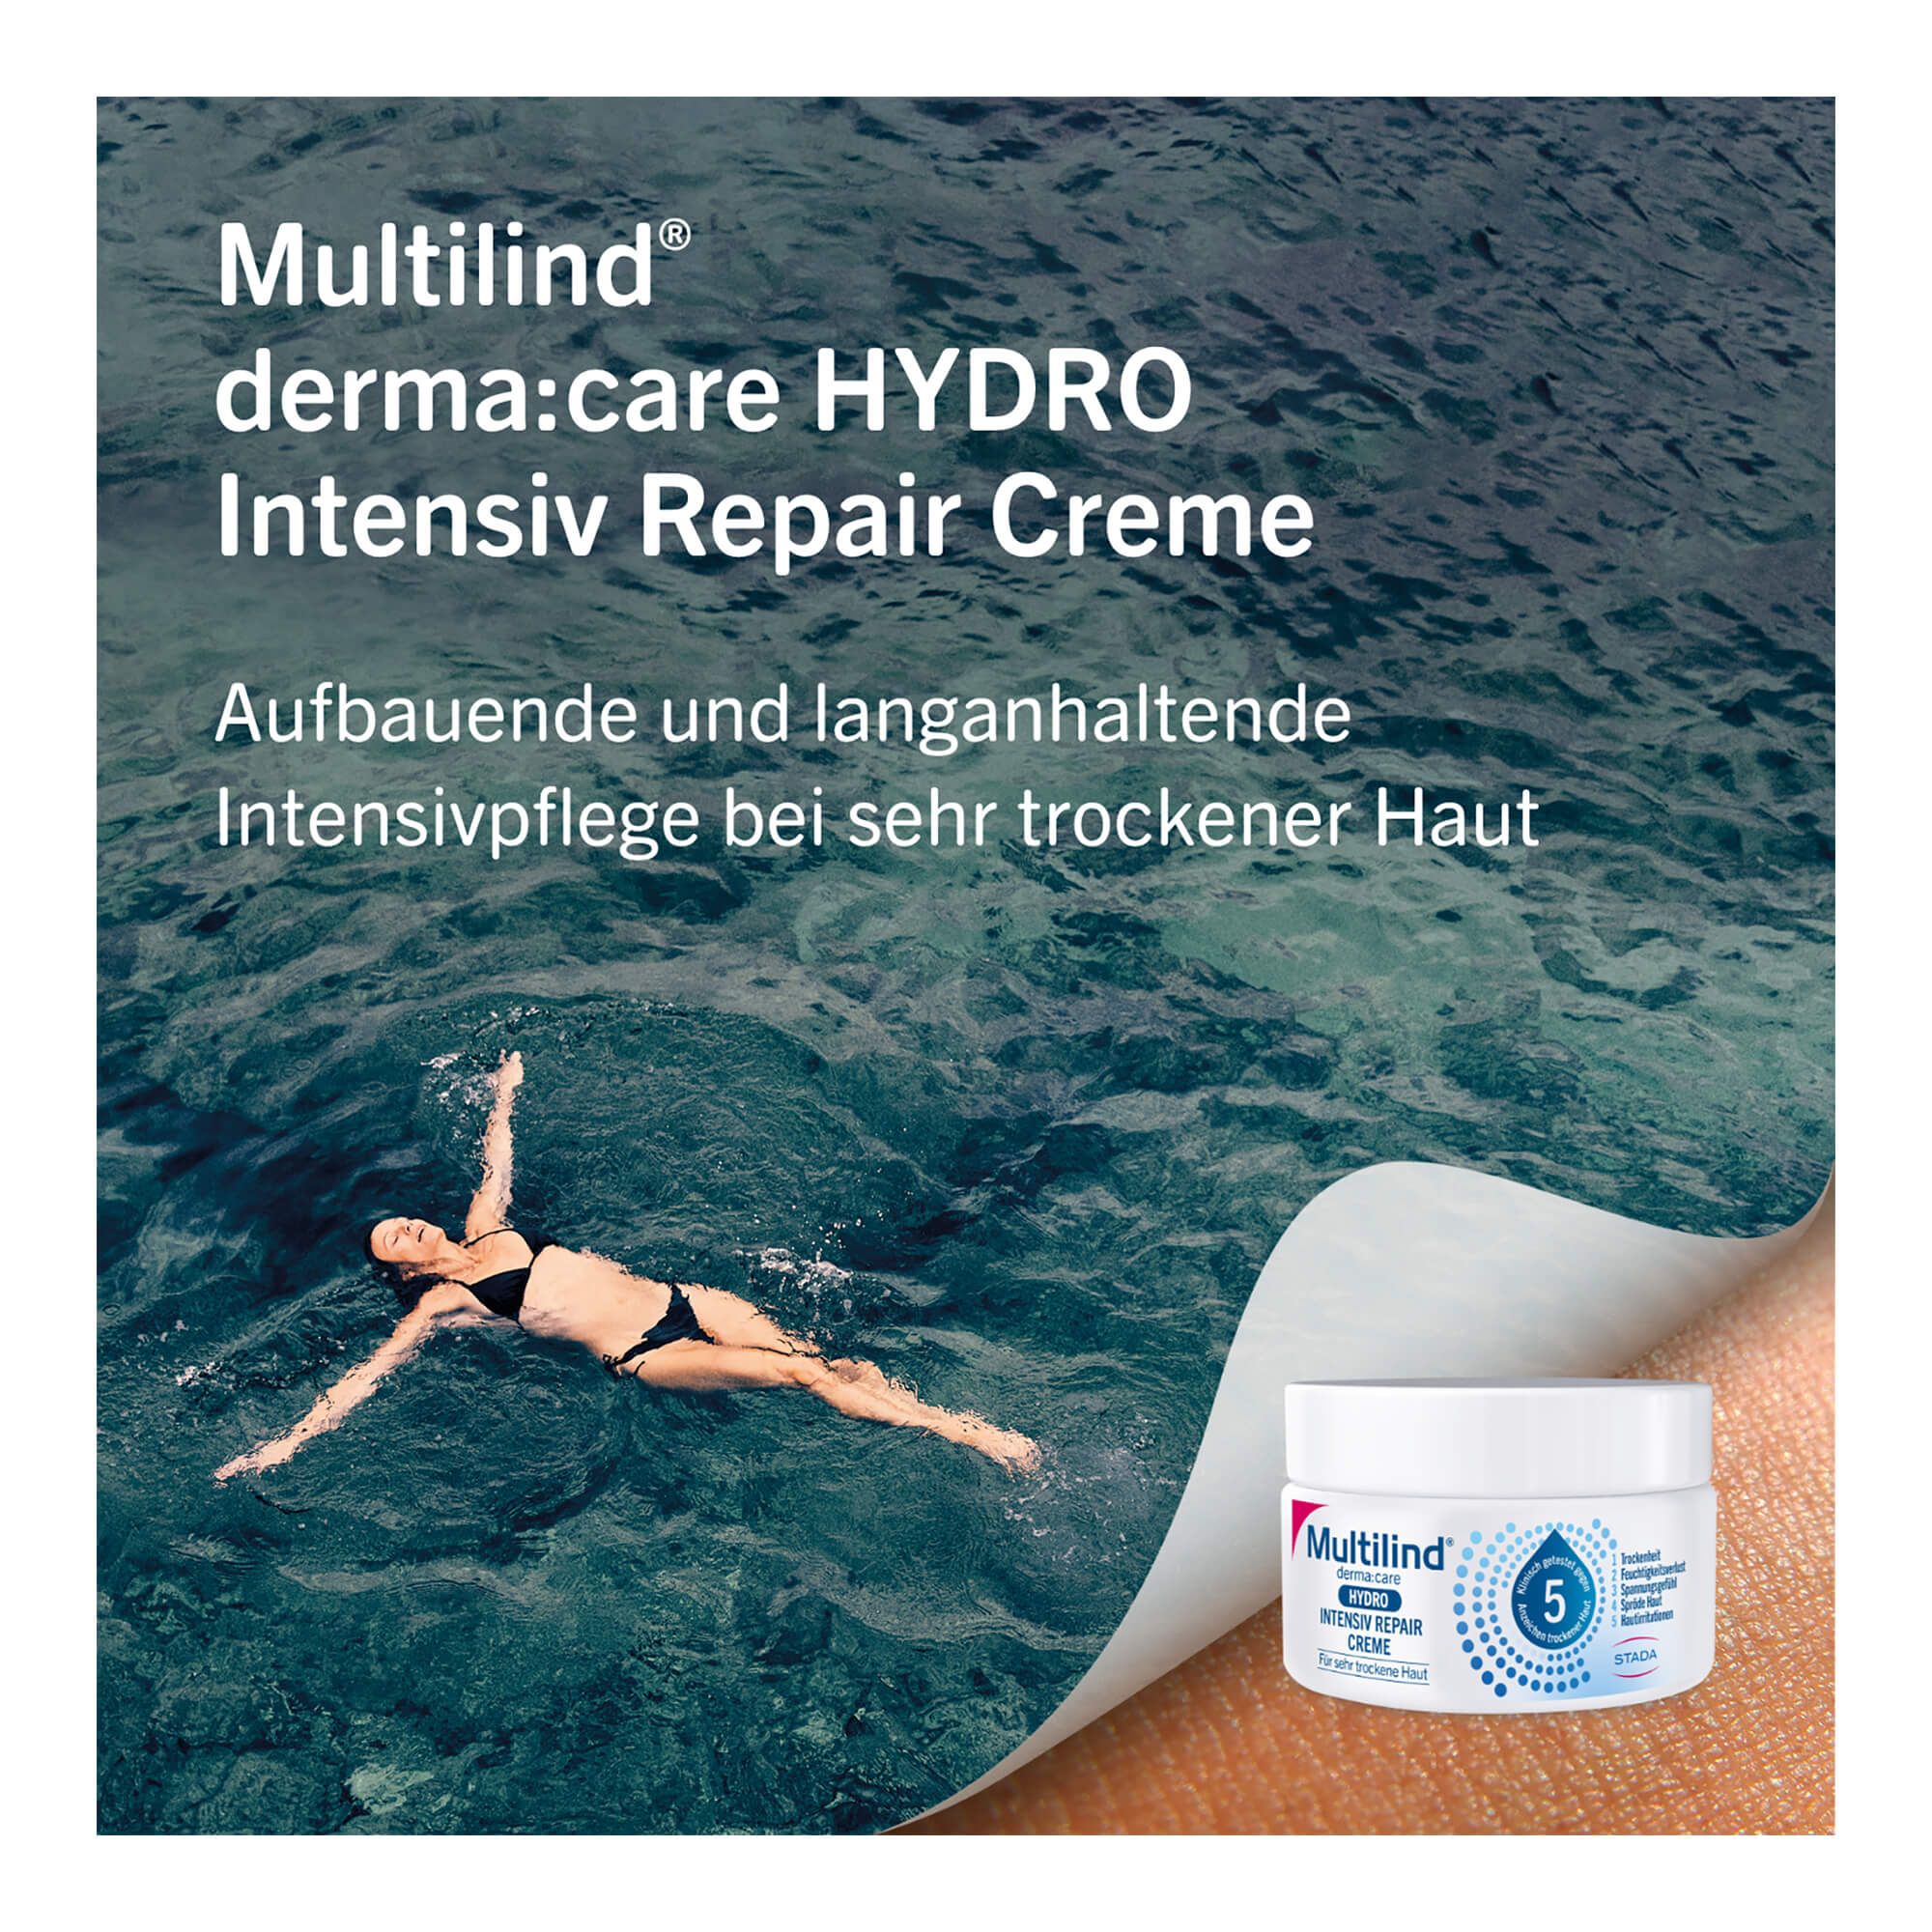 Multilind derma:care Hydro Intensiv Repair Creme Anwendungsgebiet